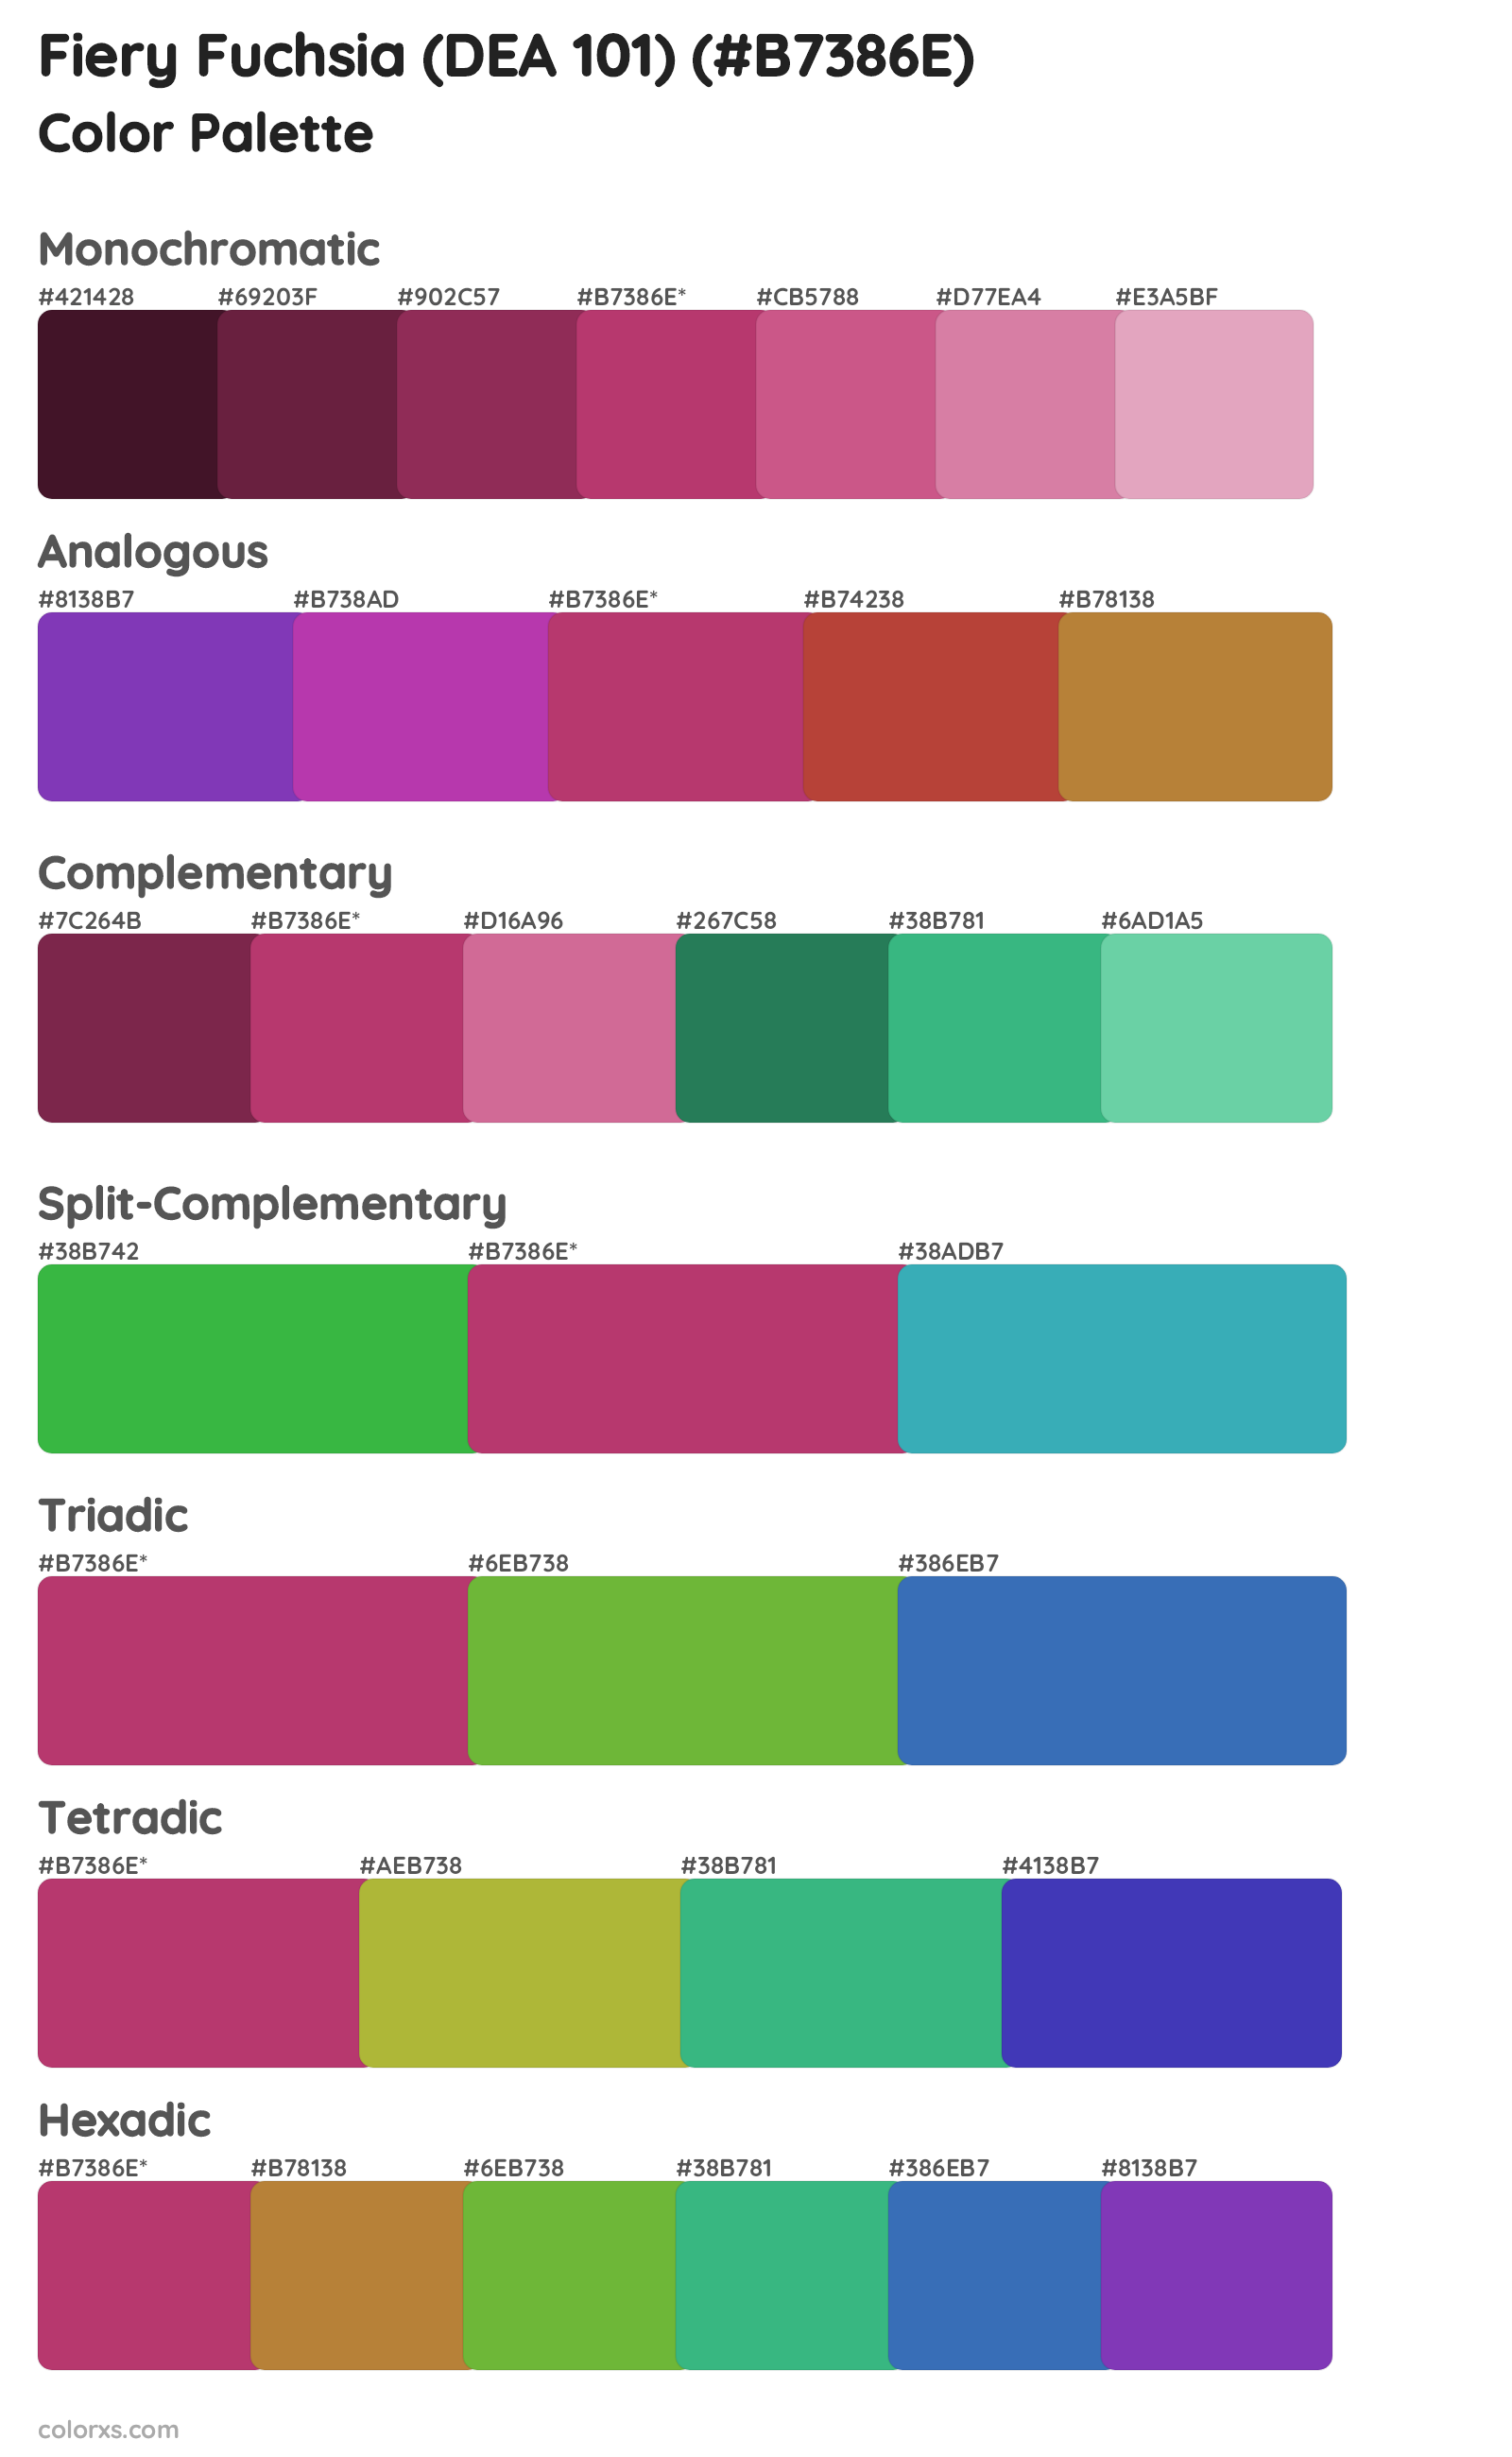 Fiery Fuchsia (DEA 101) Color Scheme Palettes